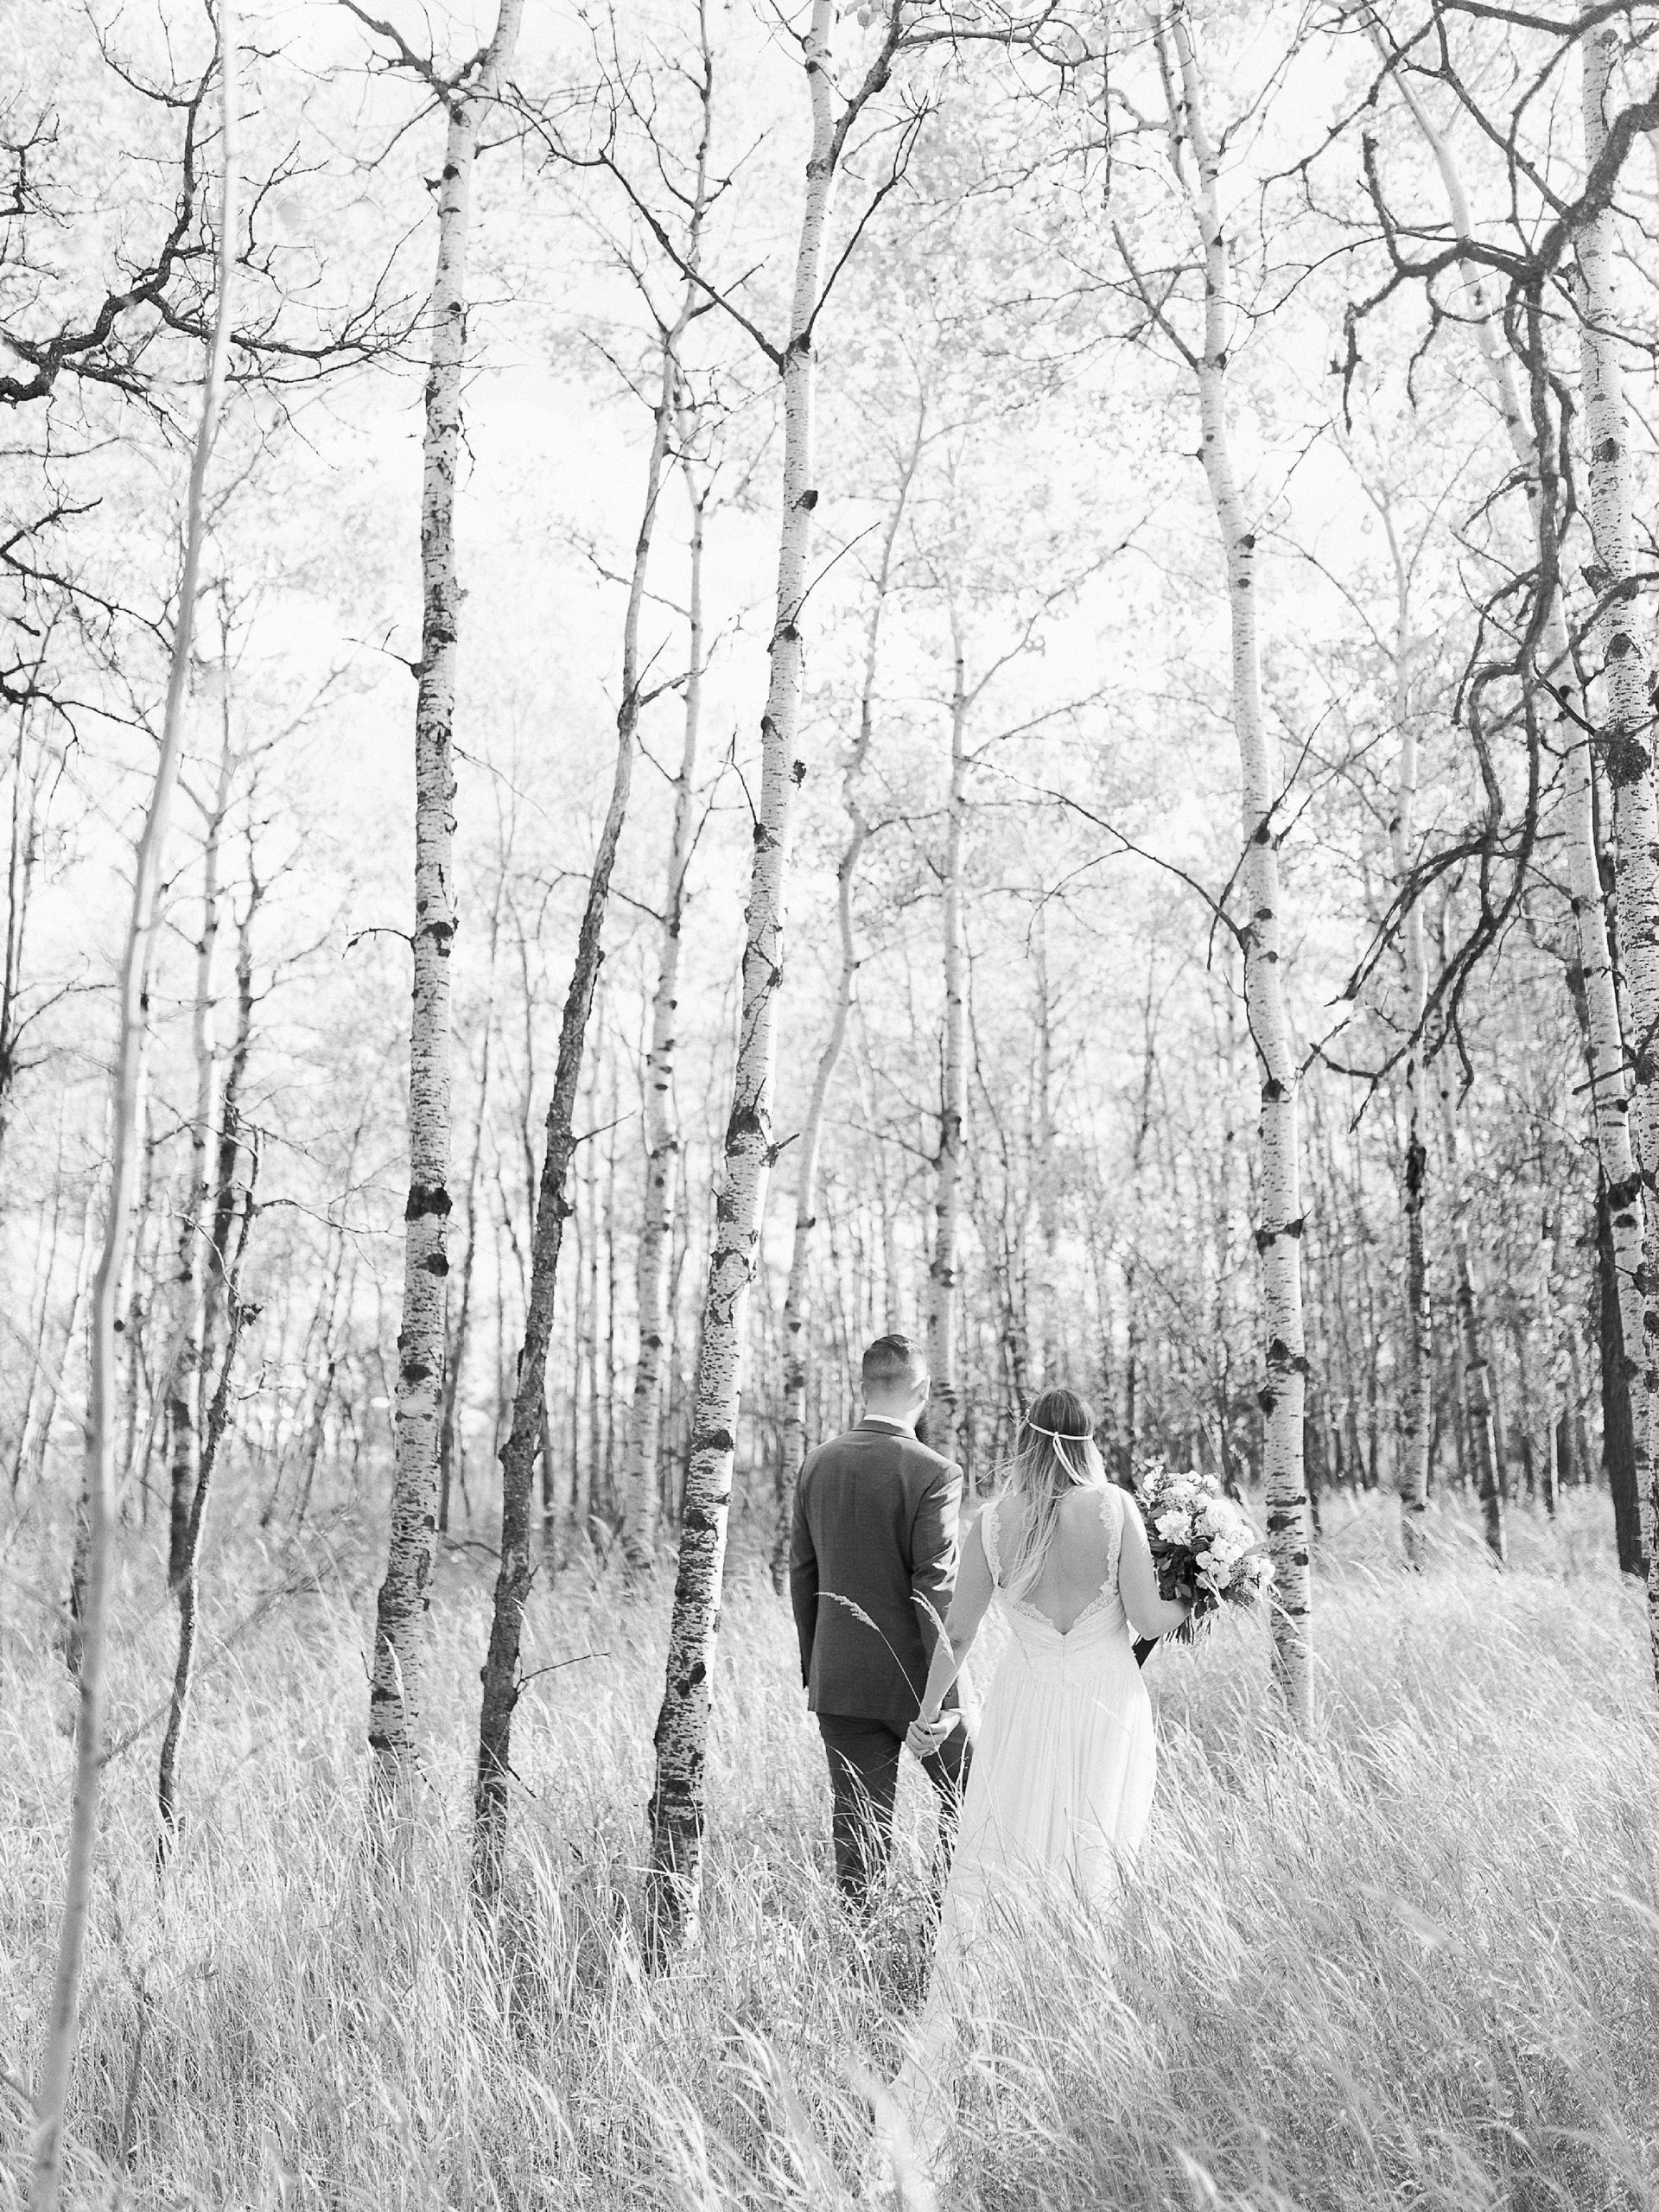 Wedding photos in the forest, Canadian Wedding Photographer, Whimsical wedding photos, Fall wedding photo ideas, Black & White wedding photos, Winnipeg Wedding Photographer